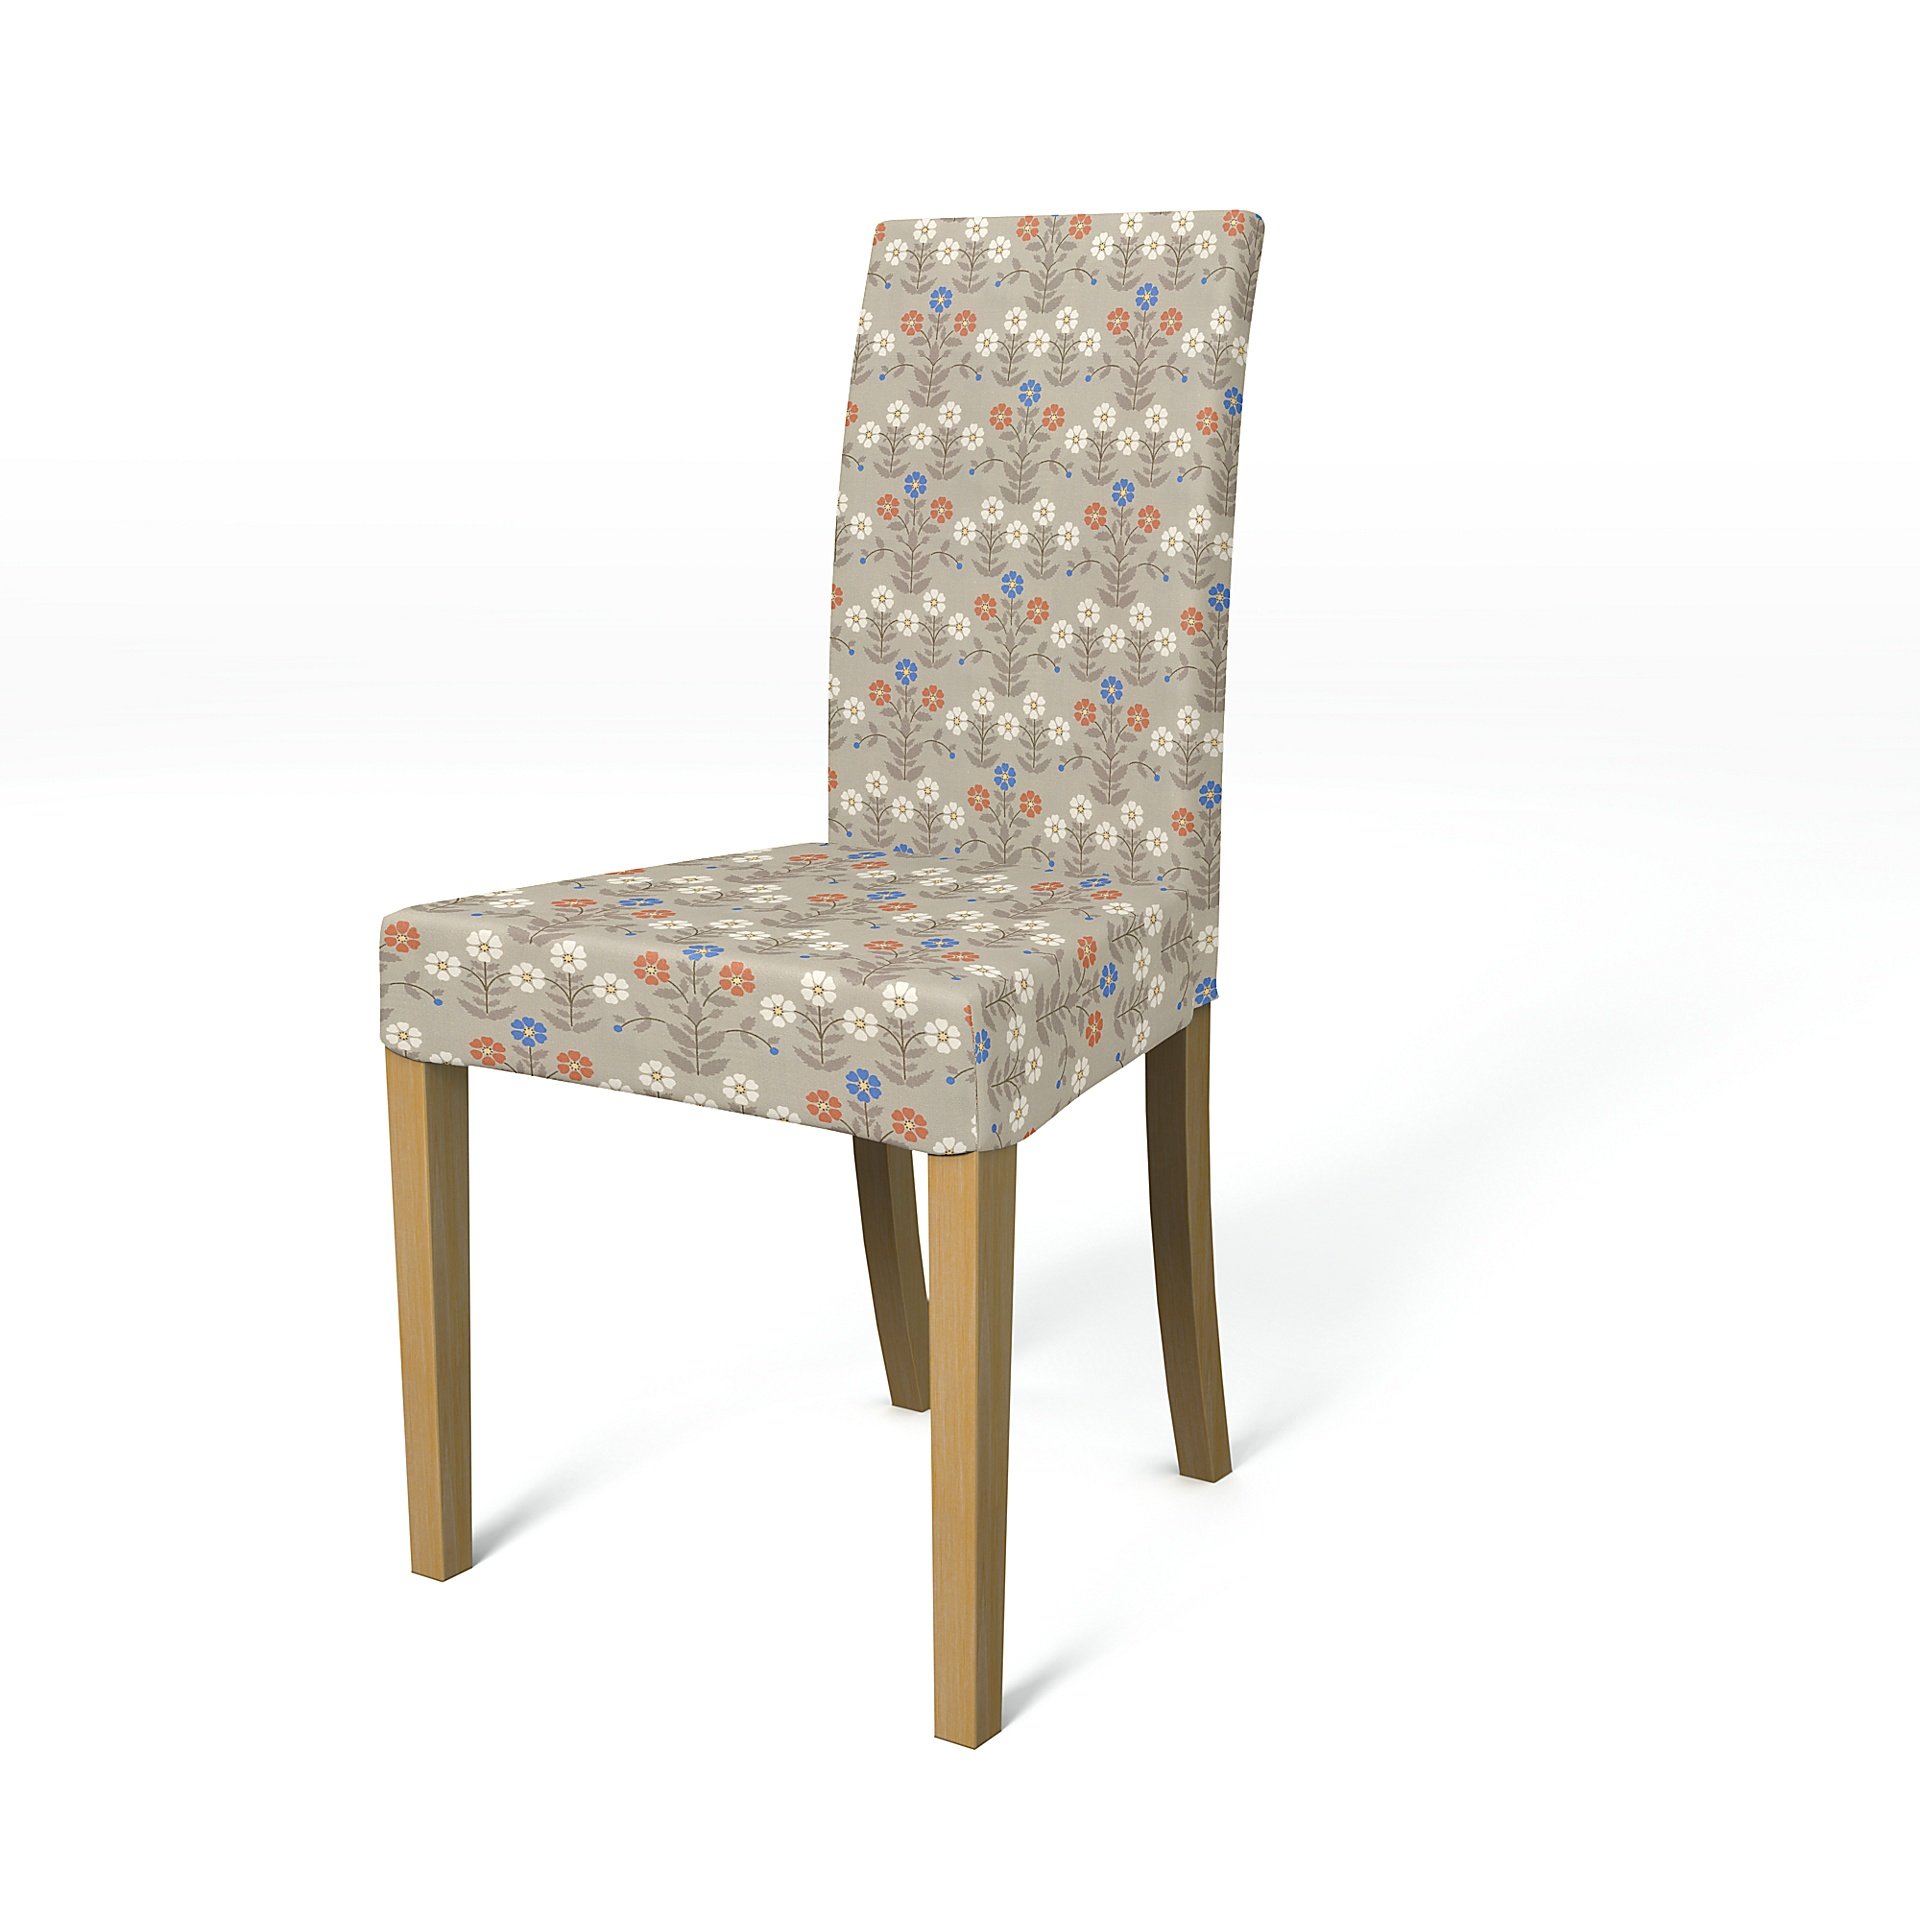 IKEA - Harry Dining Chair Cover, Sippor Blue/Orange, BEMZ x BORASTAPETER COLLECTION - Bemz